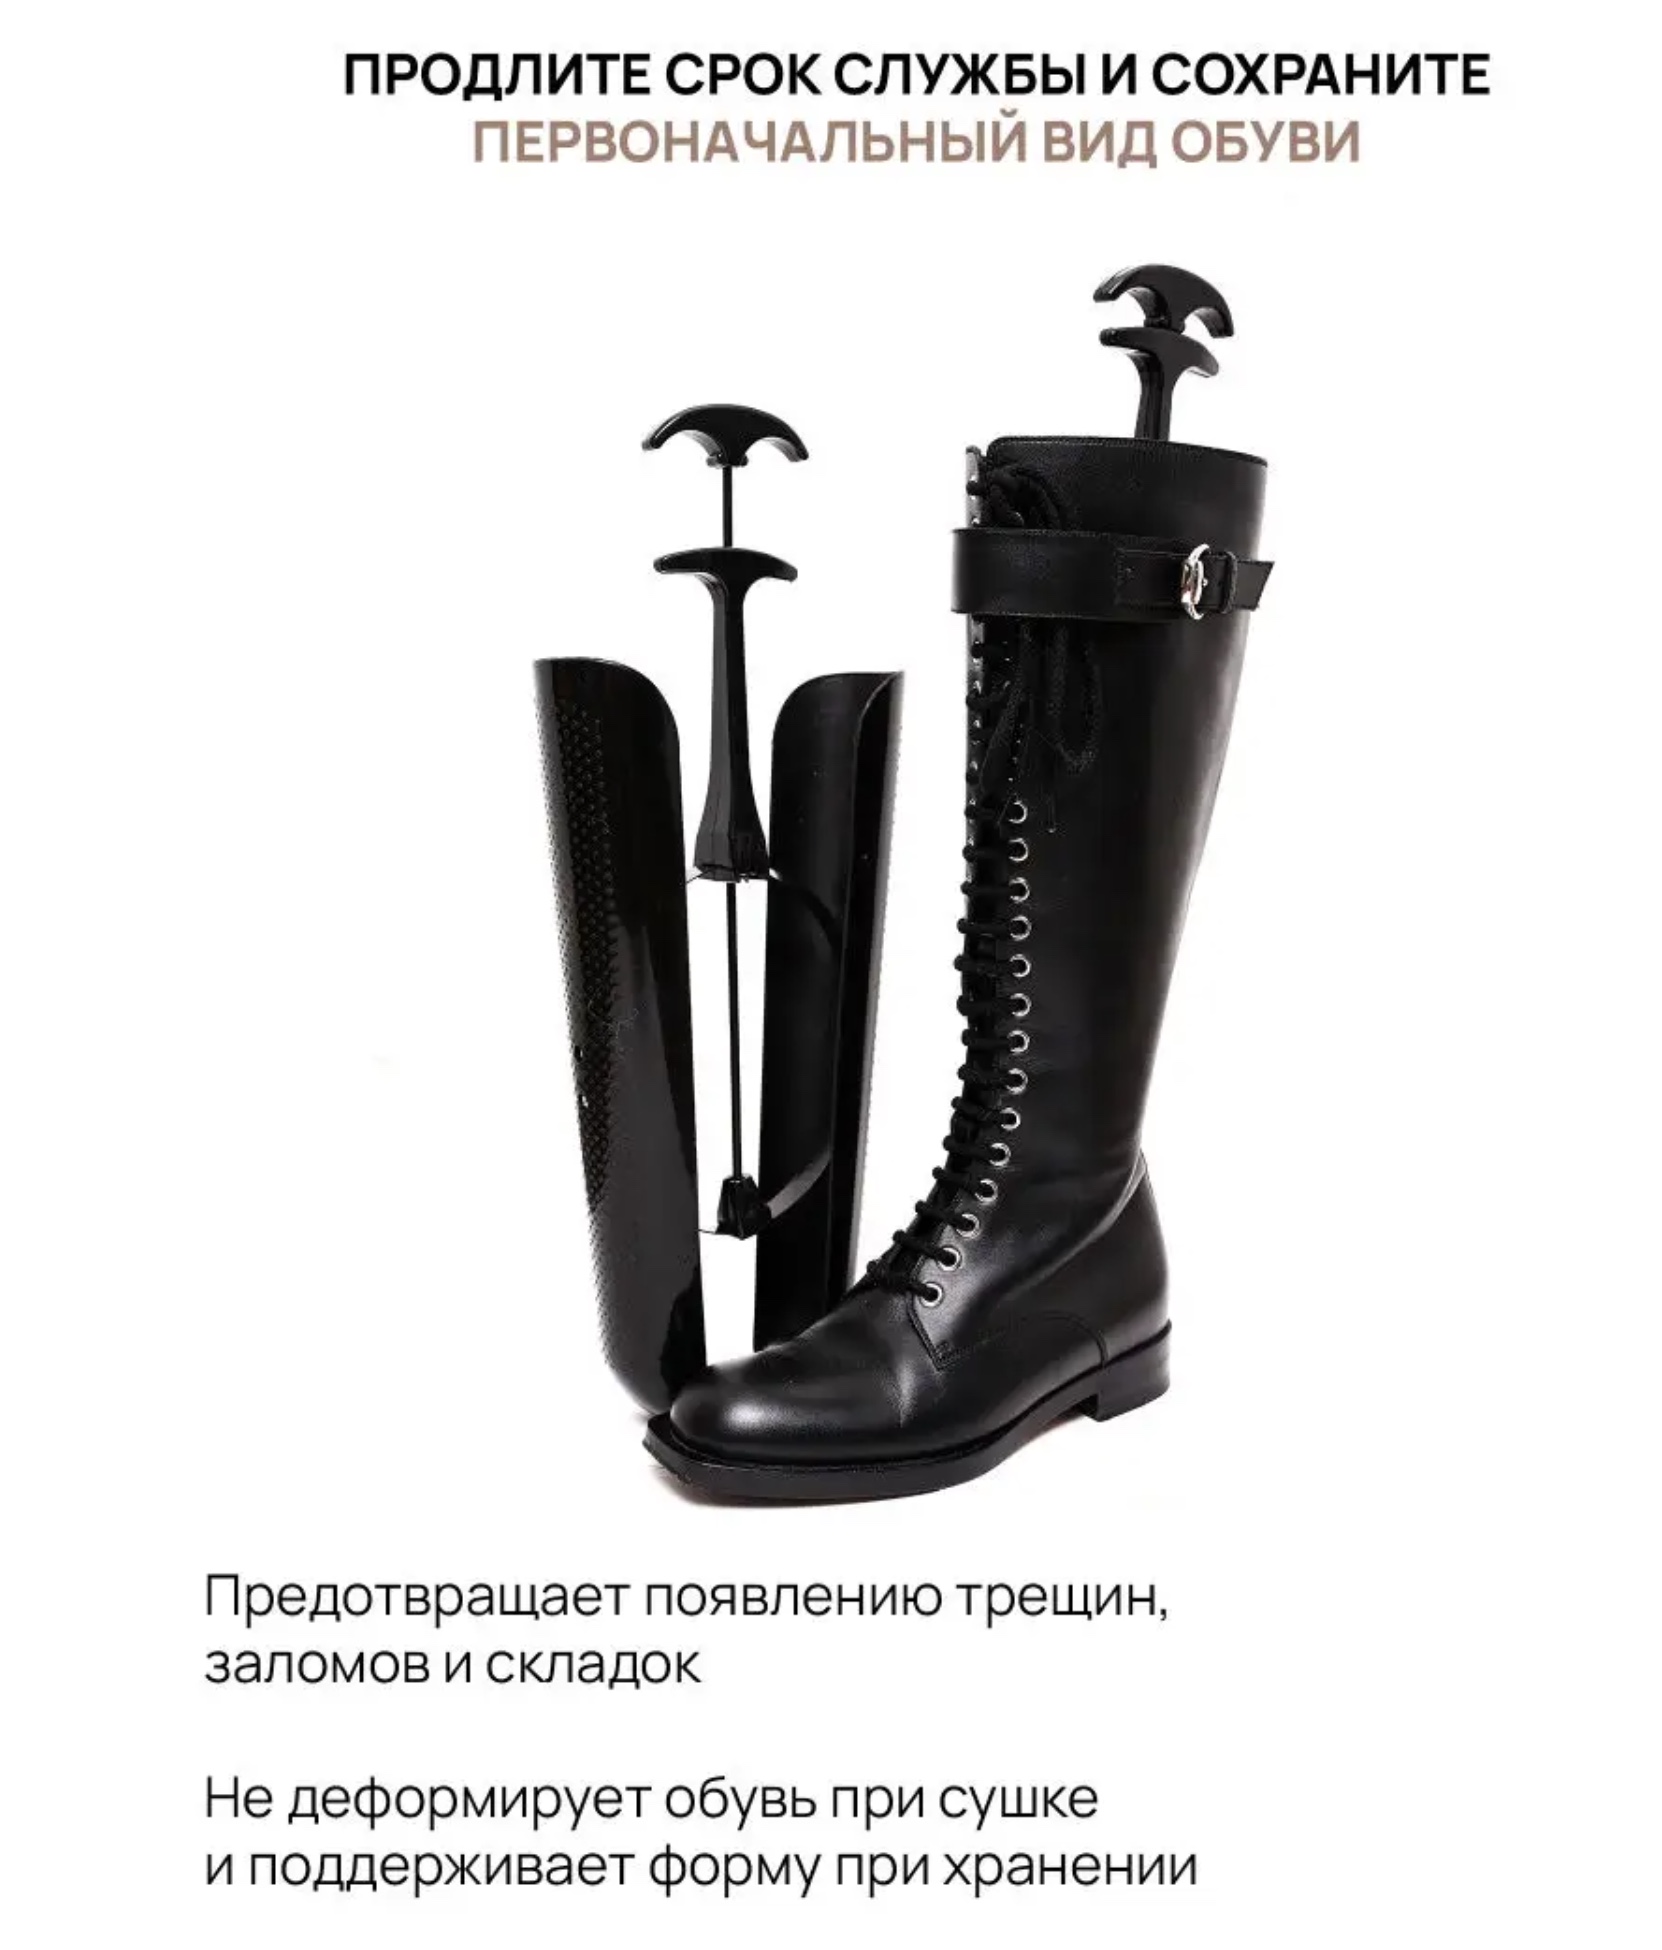 Картинка Формодержатели для голенищ сапог, пластик, 5 пар от магазина Vaksa.ru